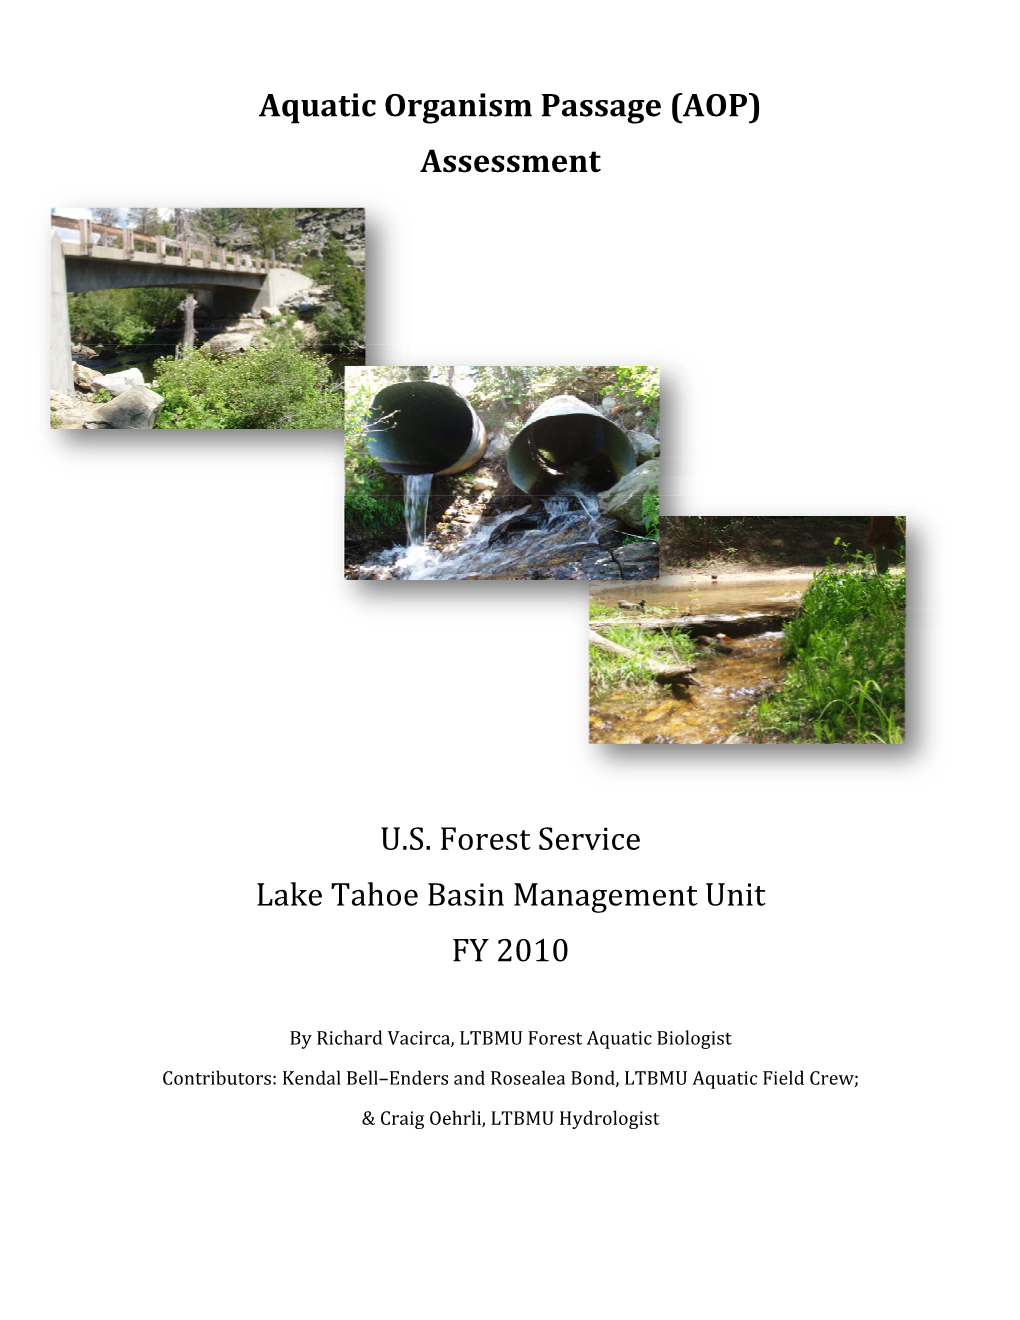 Aquatic Organism Passage (AOP) Assessment U.S. Forest Service